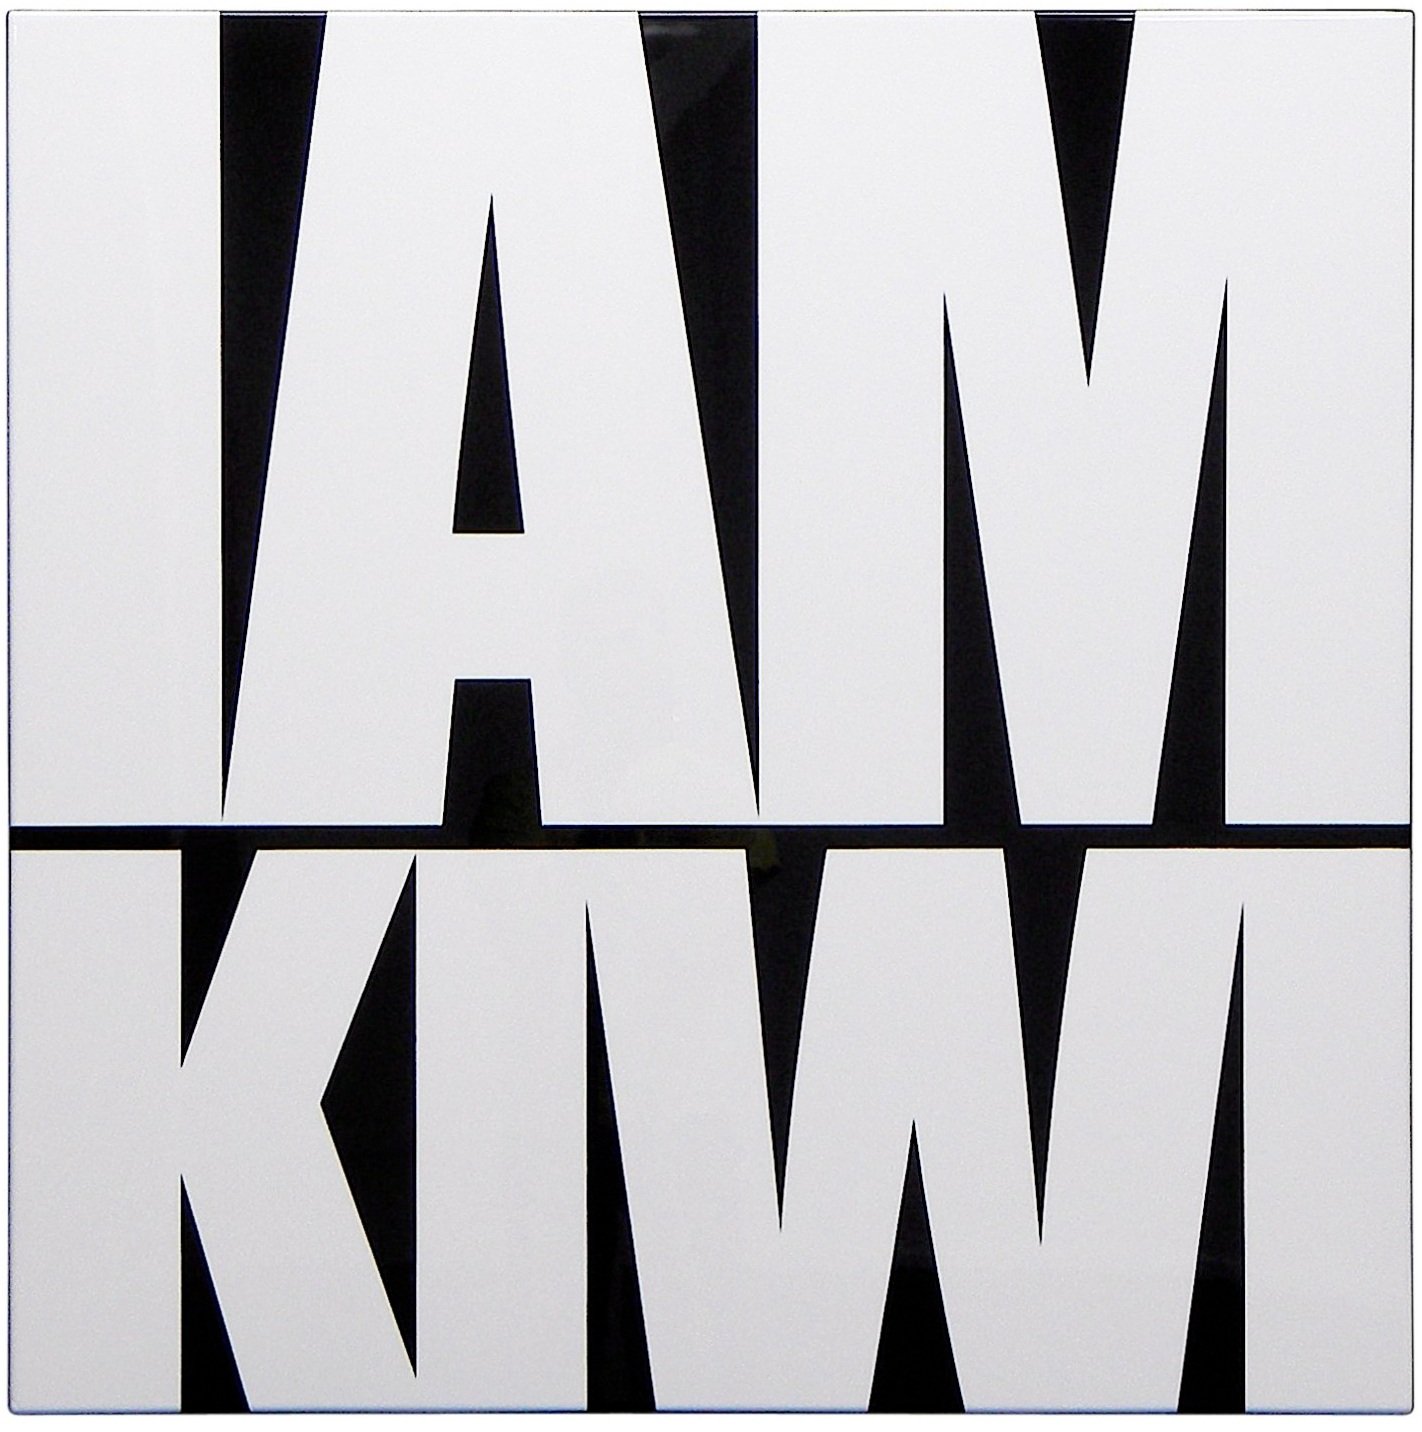 I AM KIWI, I AM IWI